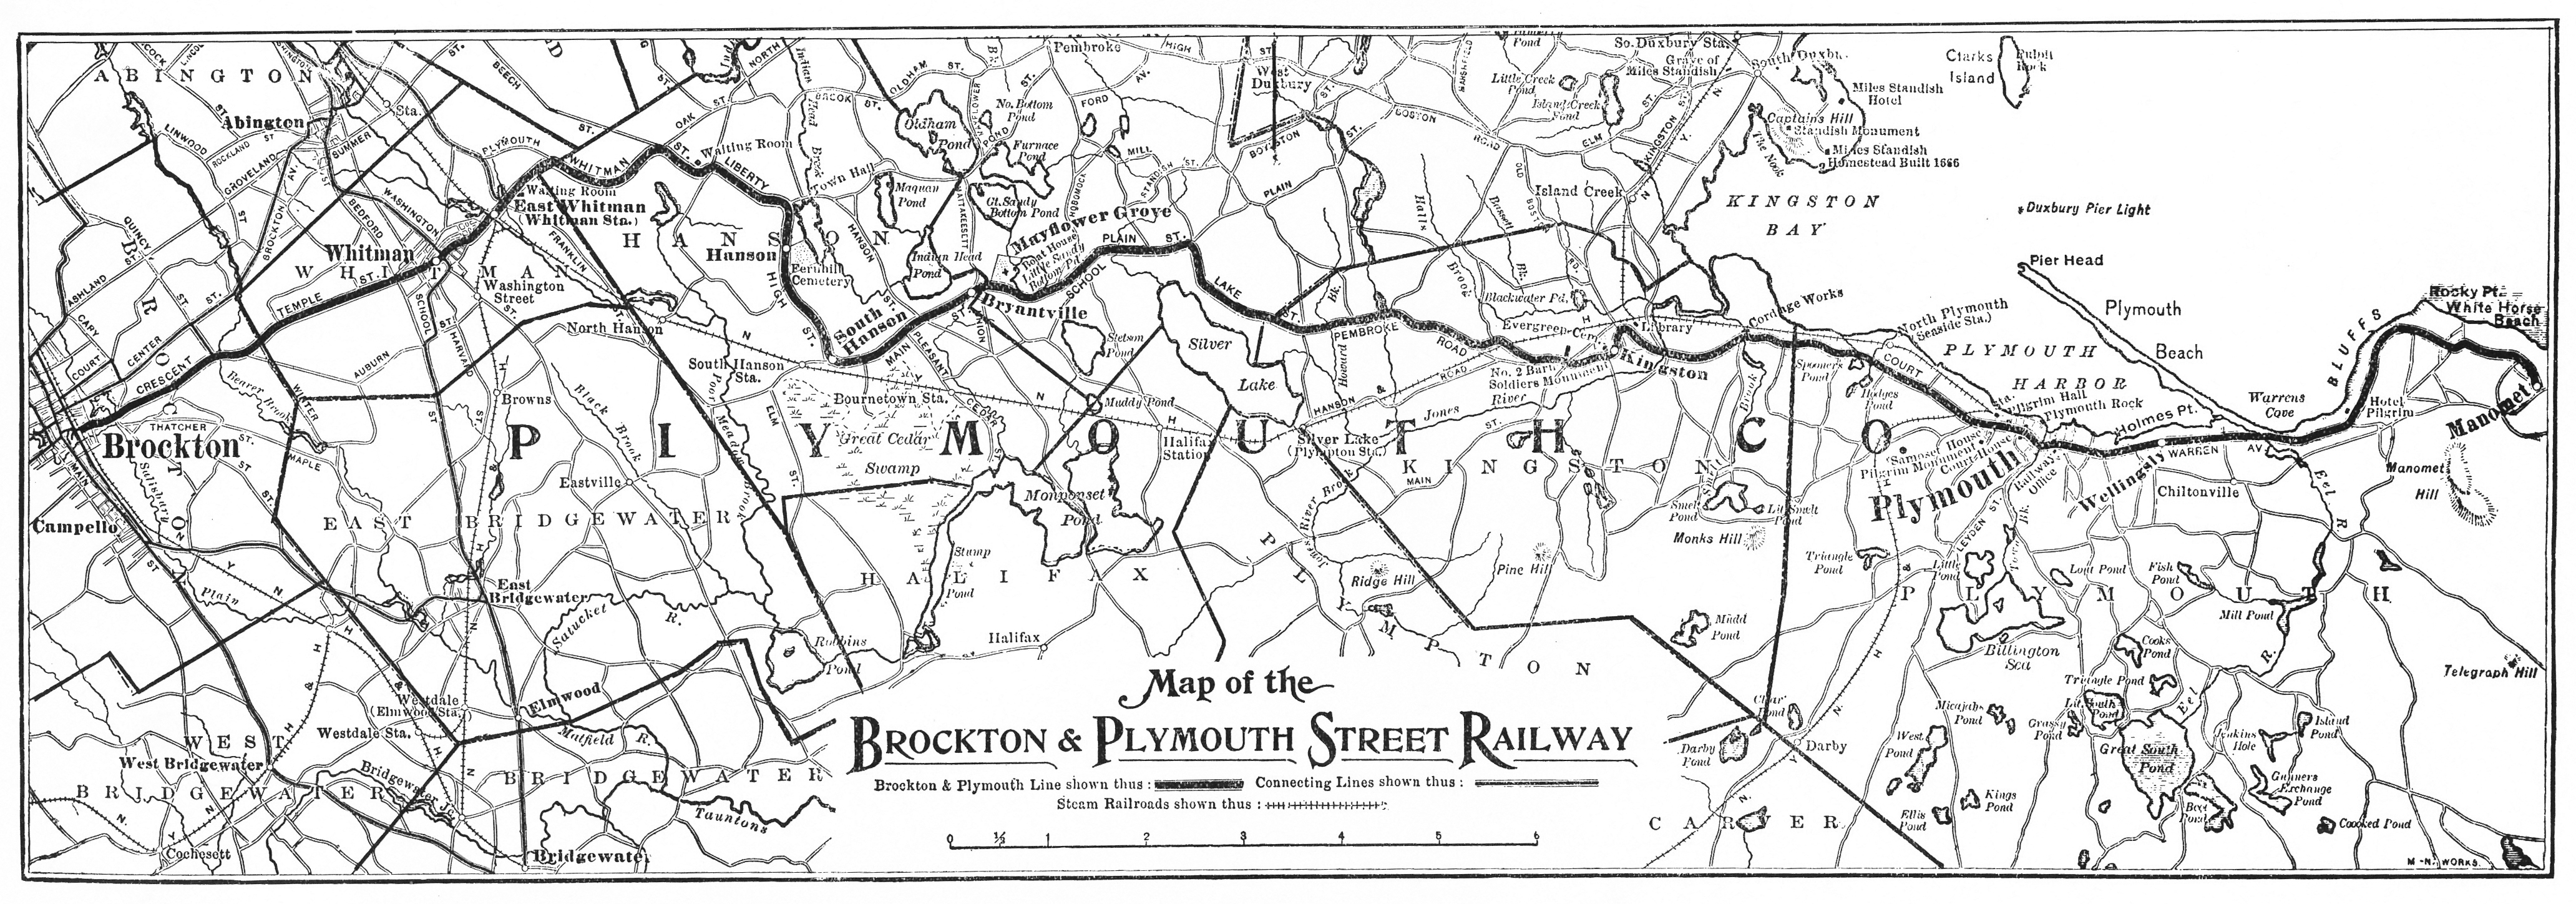 Map of the Brockton & Plymouth Street Railway, n.d.